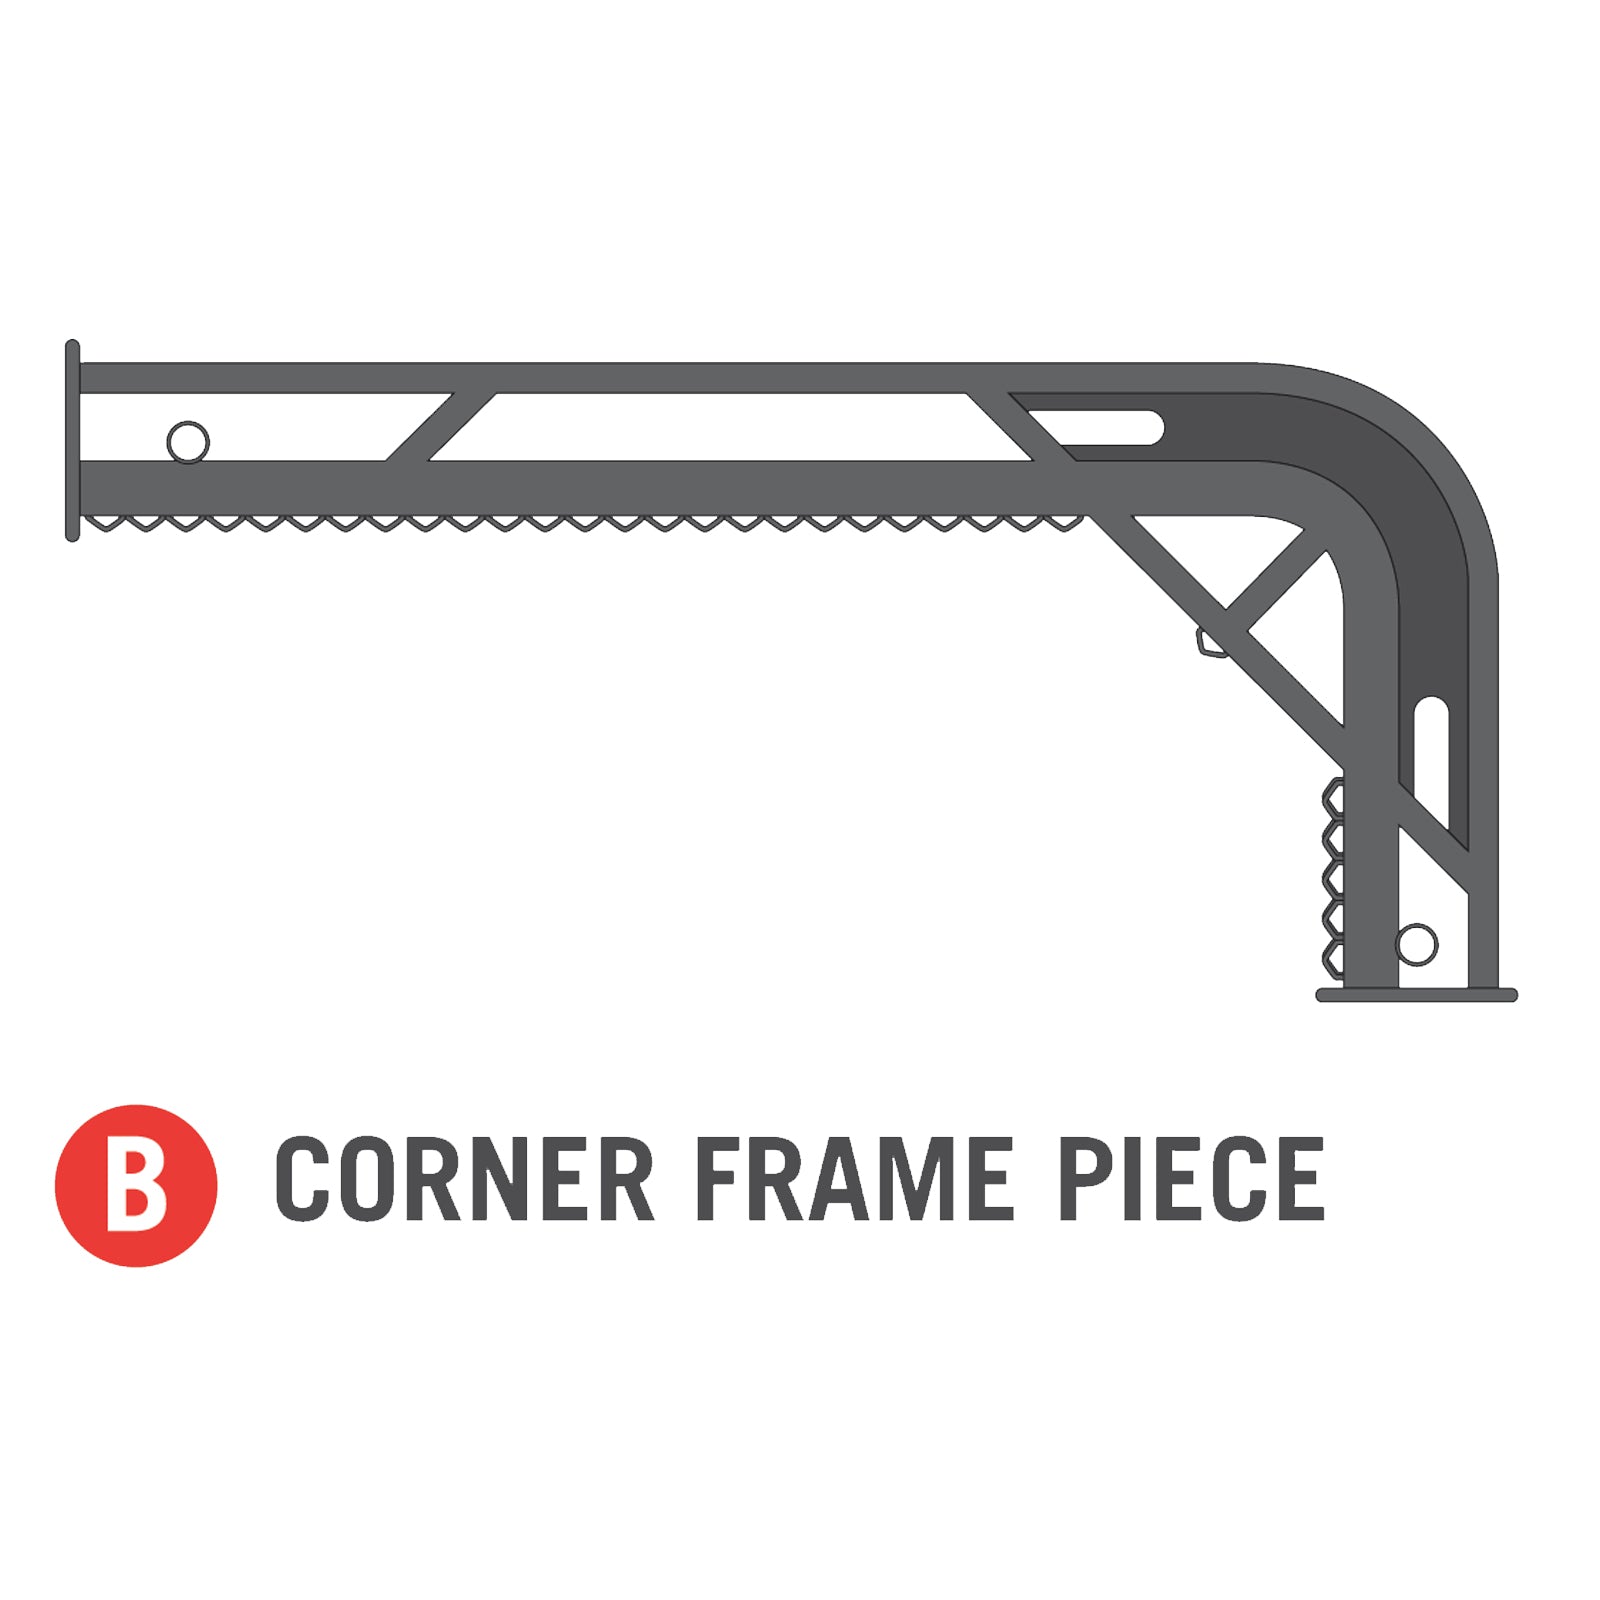 B Corner Frame Piece for 11x18 foot Horizon Trampoline Part